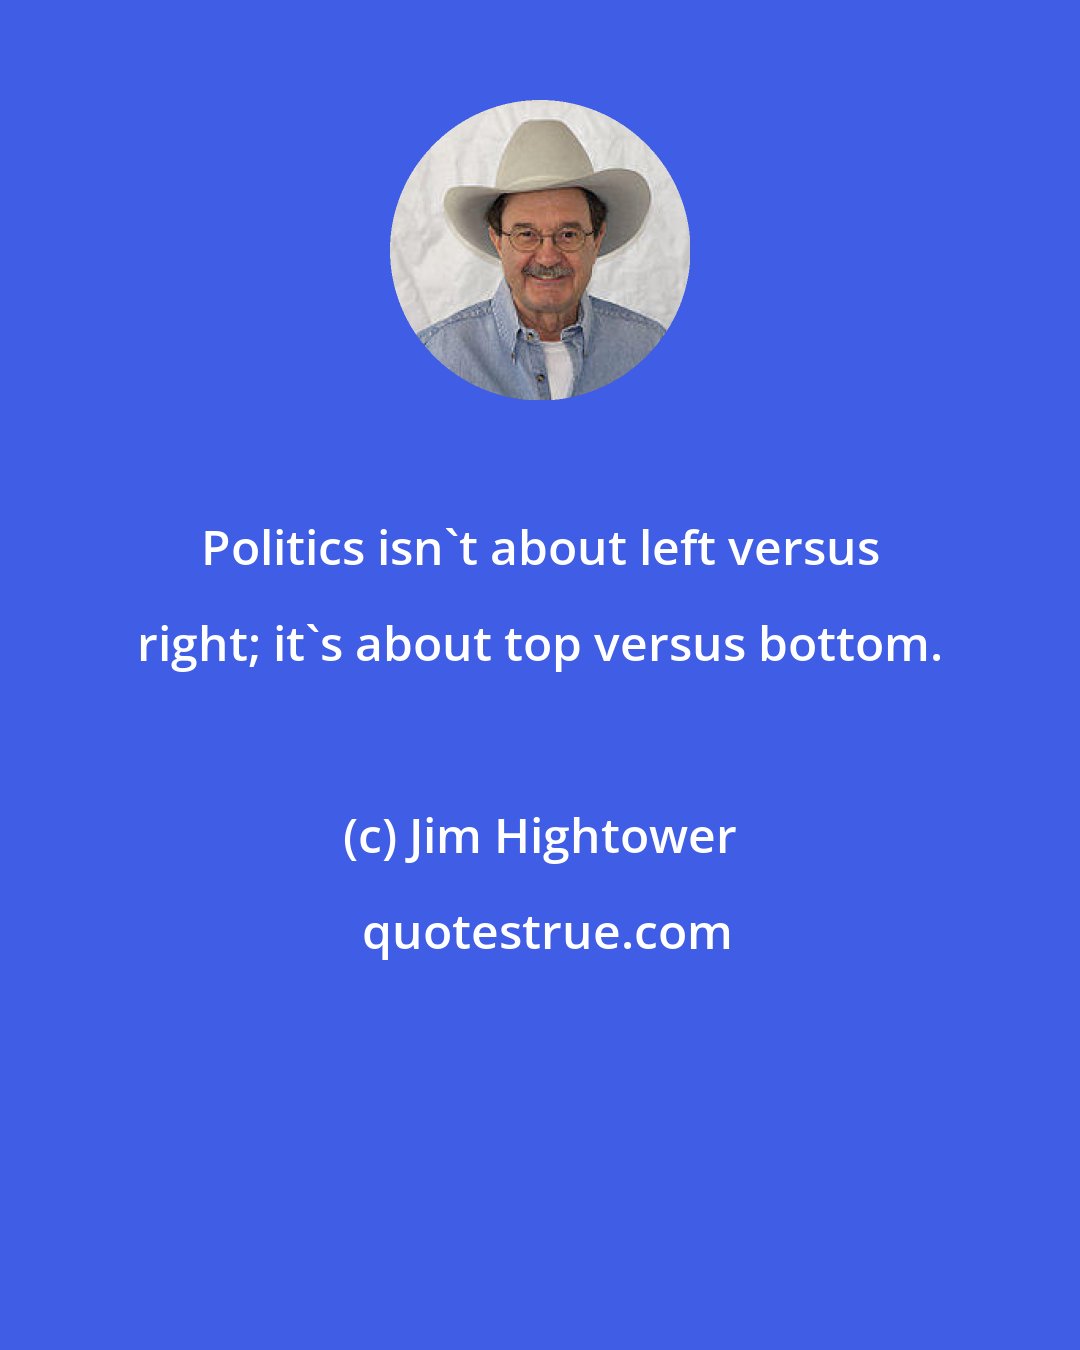 Jim Hightower: Politics isn't about left versus right; it's about top versus bottom.